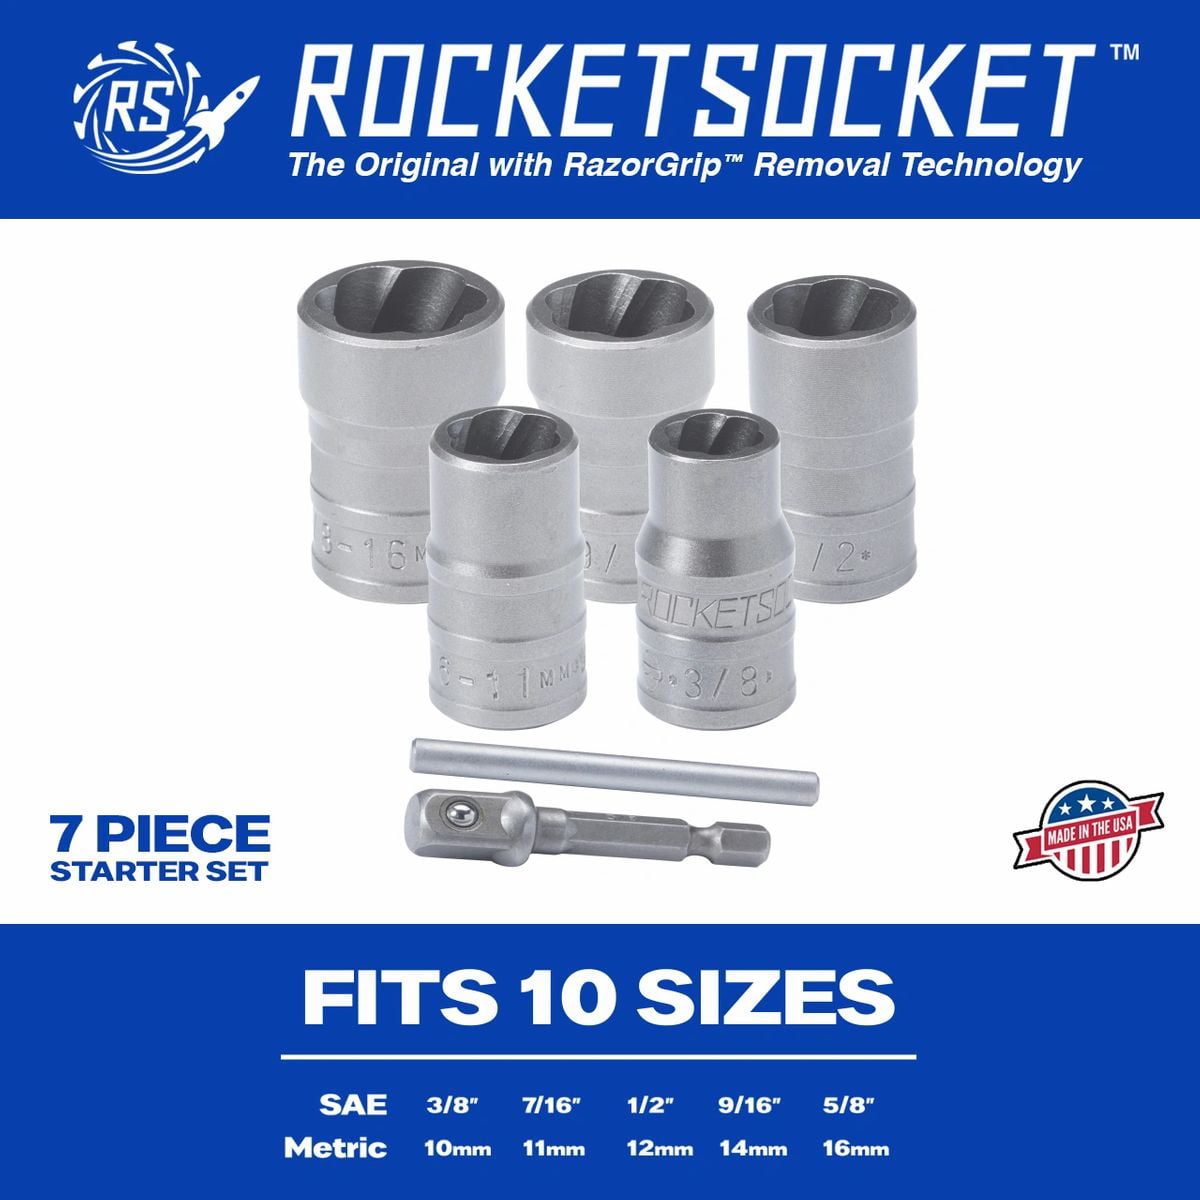 6 pieces ROCKETSOCKET 3/8" Drive Nut & Screw Extraction Sockets Bolt 